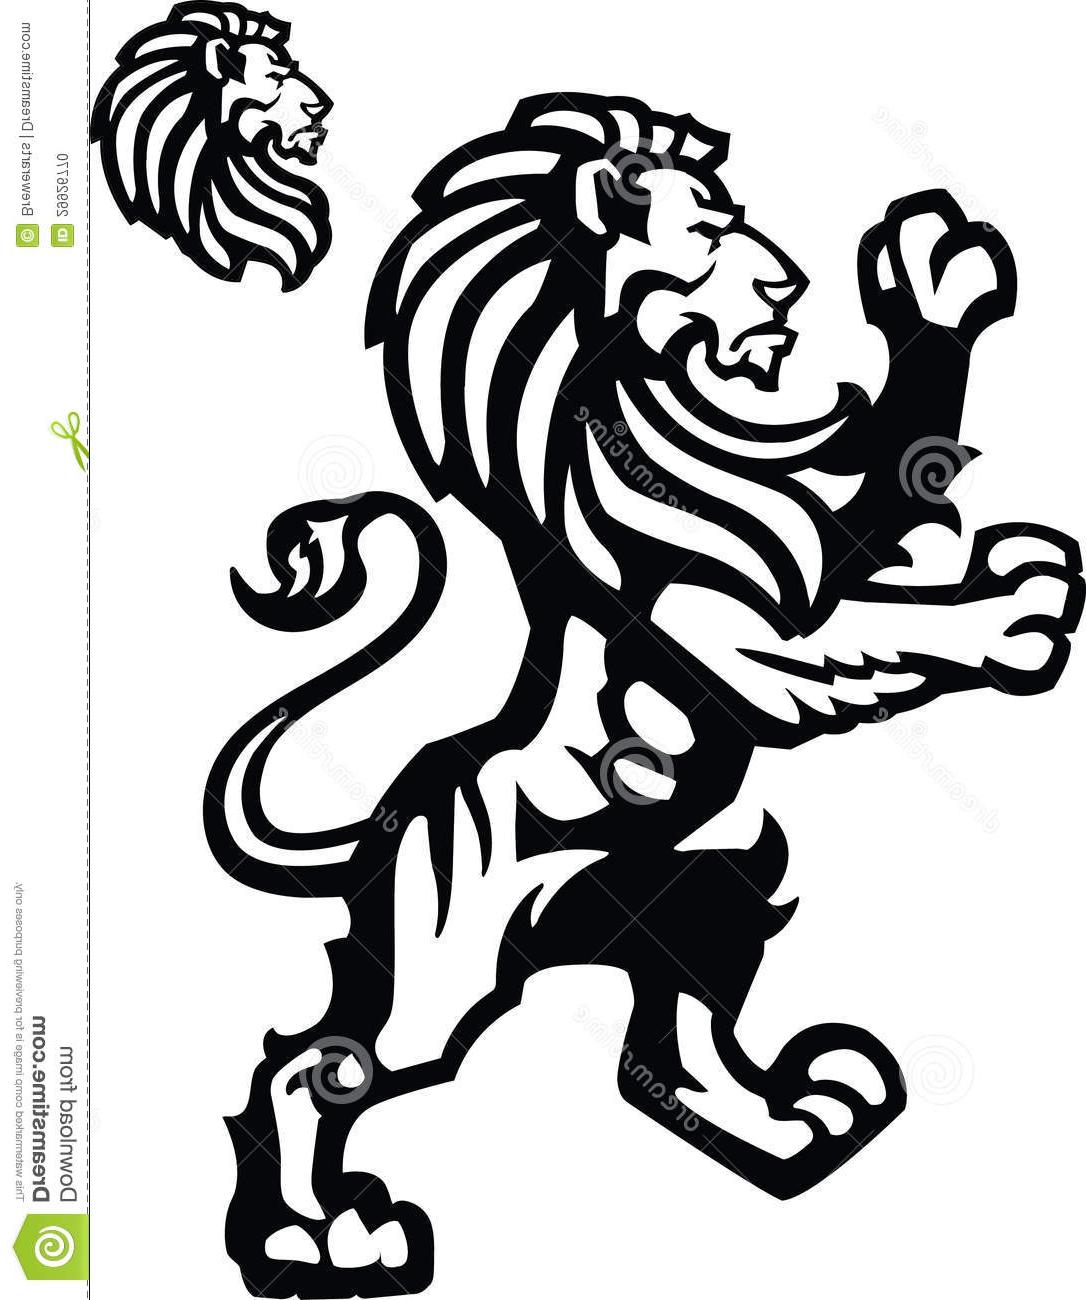 Lion Mascot Clipart